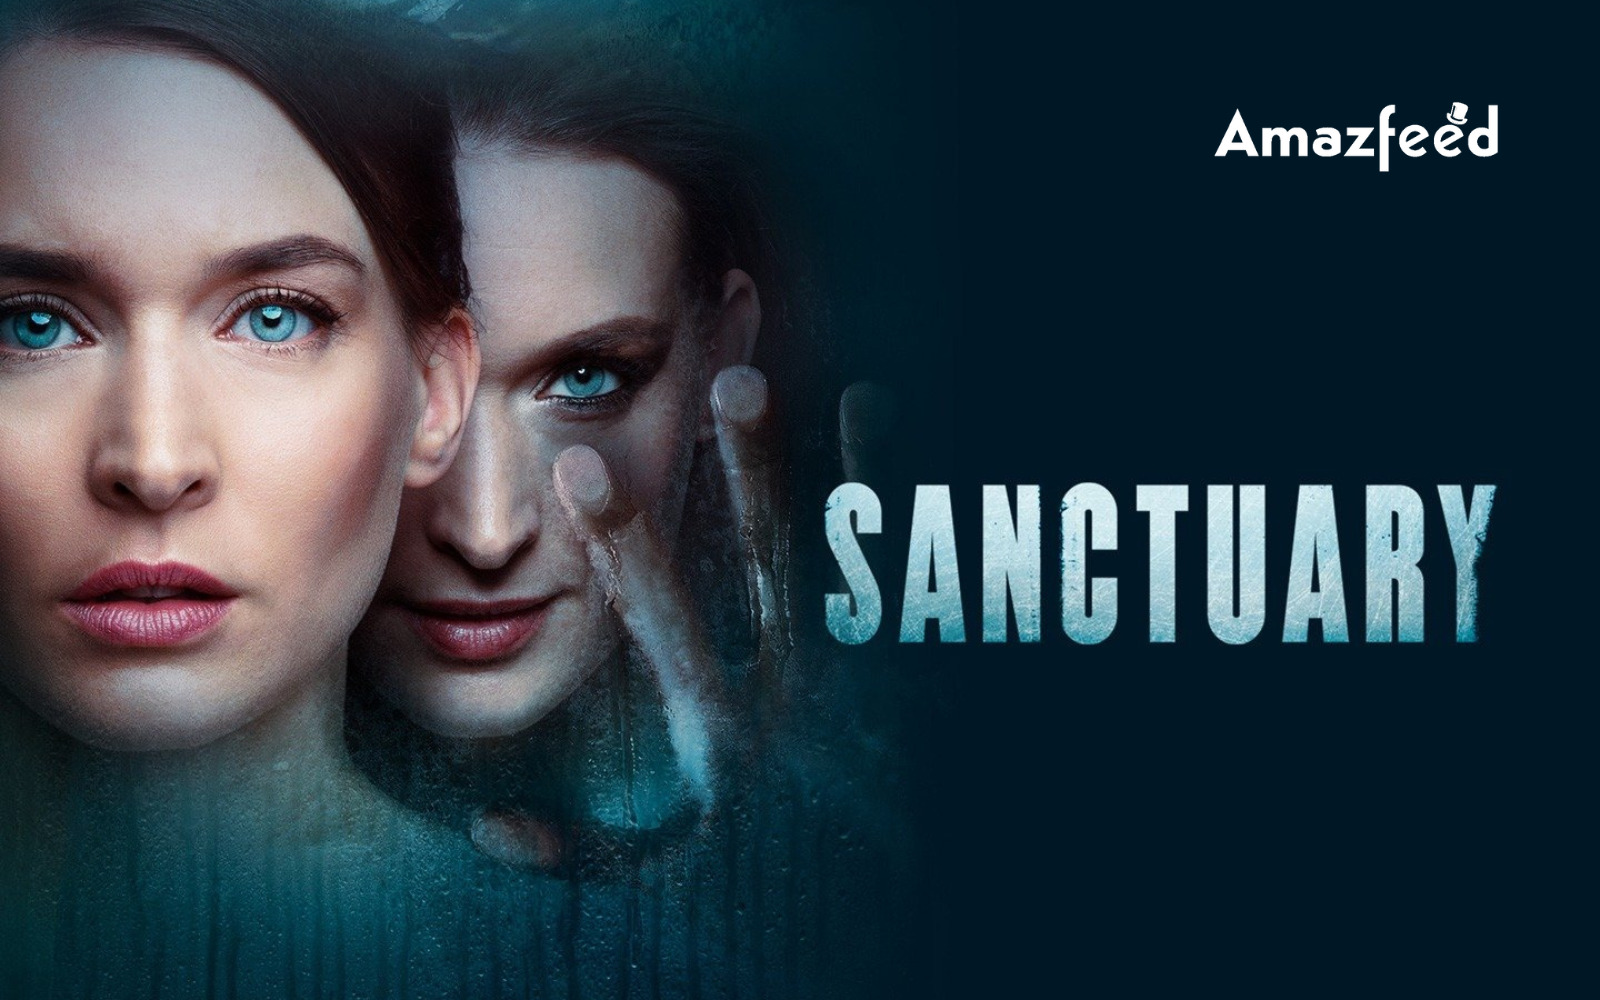 Sanctuary (2019)